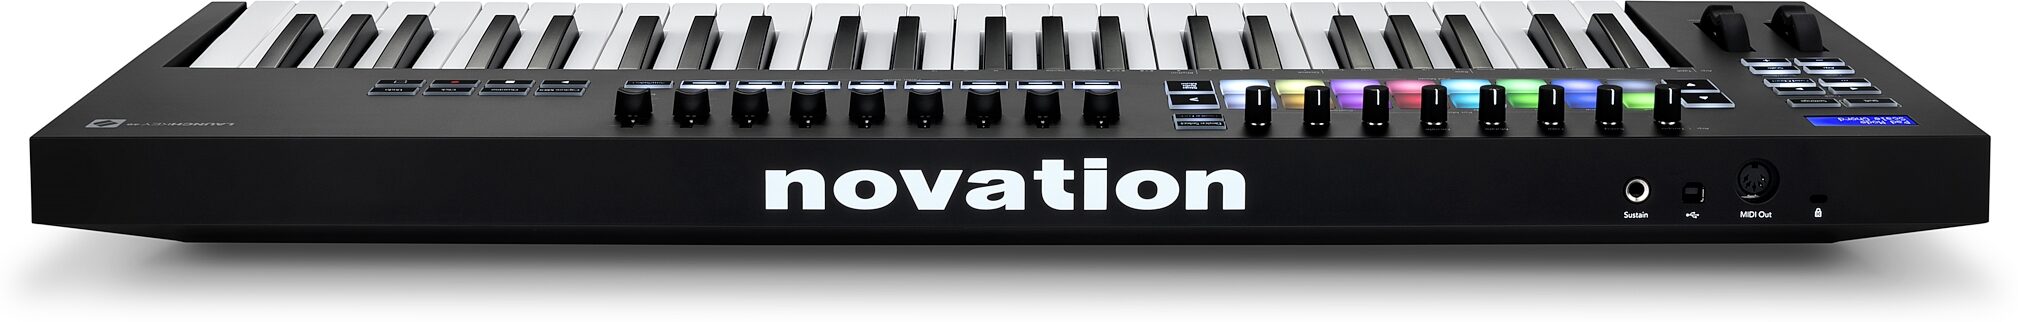 Novation Launchkey 49 MK3 USB MIDI Keyboard Controller | zZounds